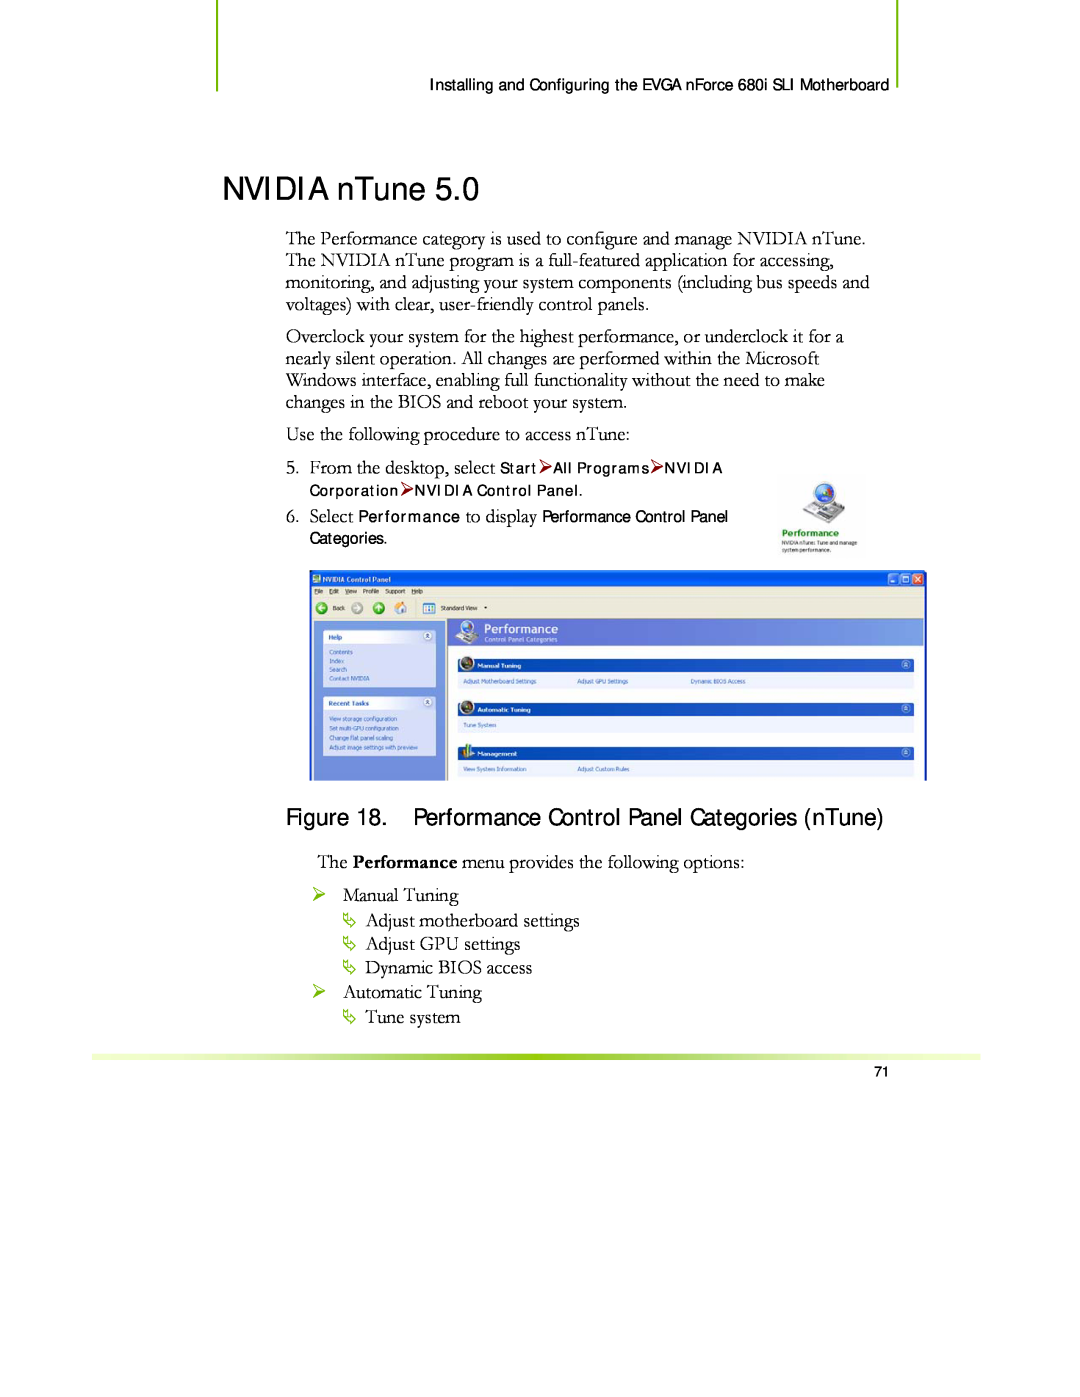 EVGA 122-CK-NF68-XX manual NVIDIA nTune, Performance Control Panel Categories nTune 